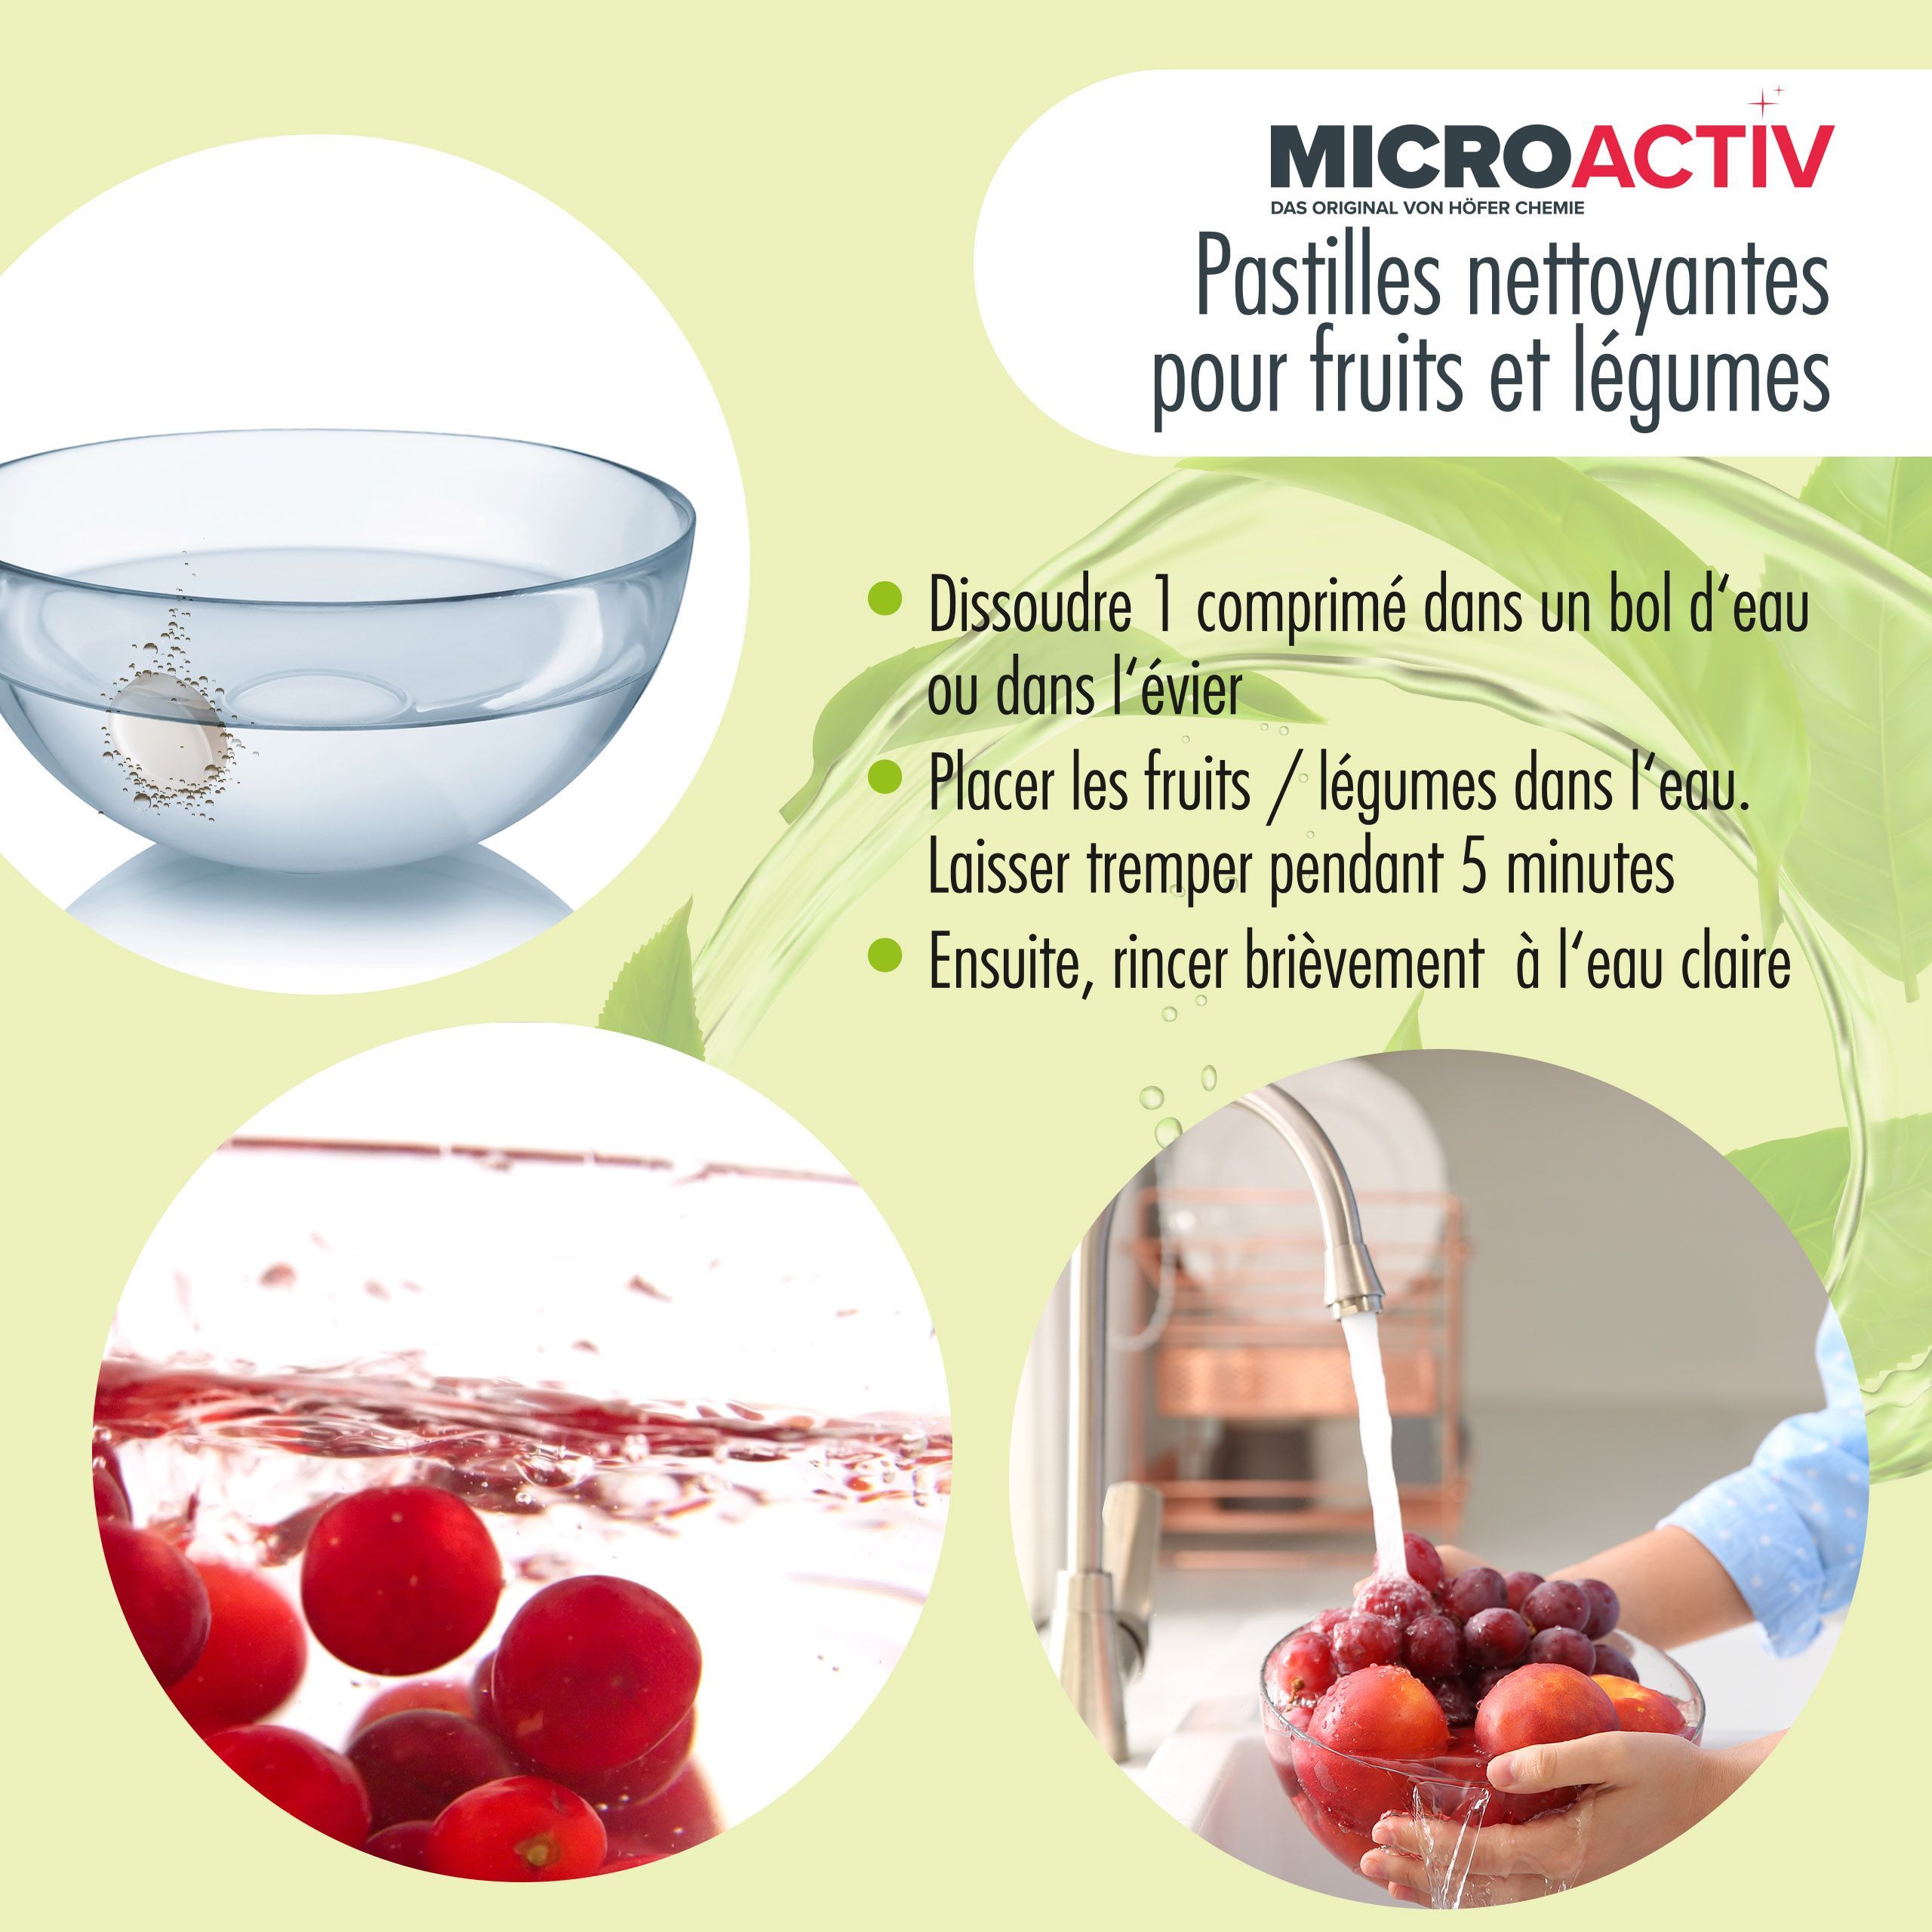 160 g Microactiv® Obst & Gemüse Reiniger Tabs